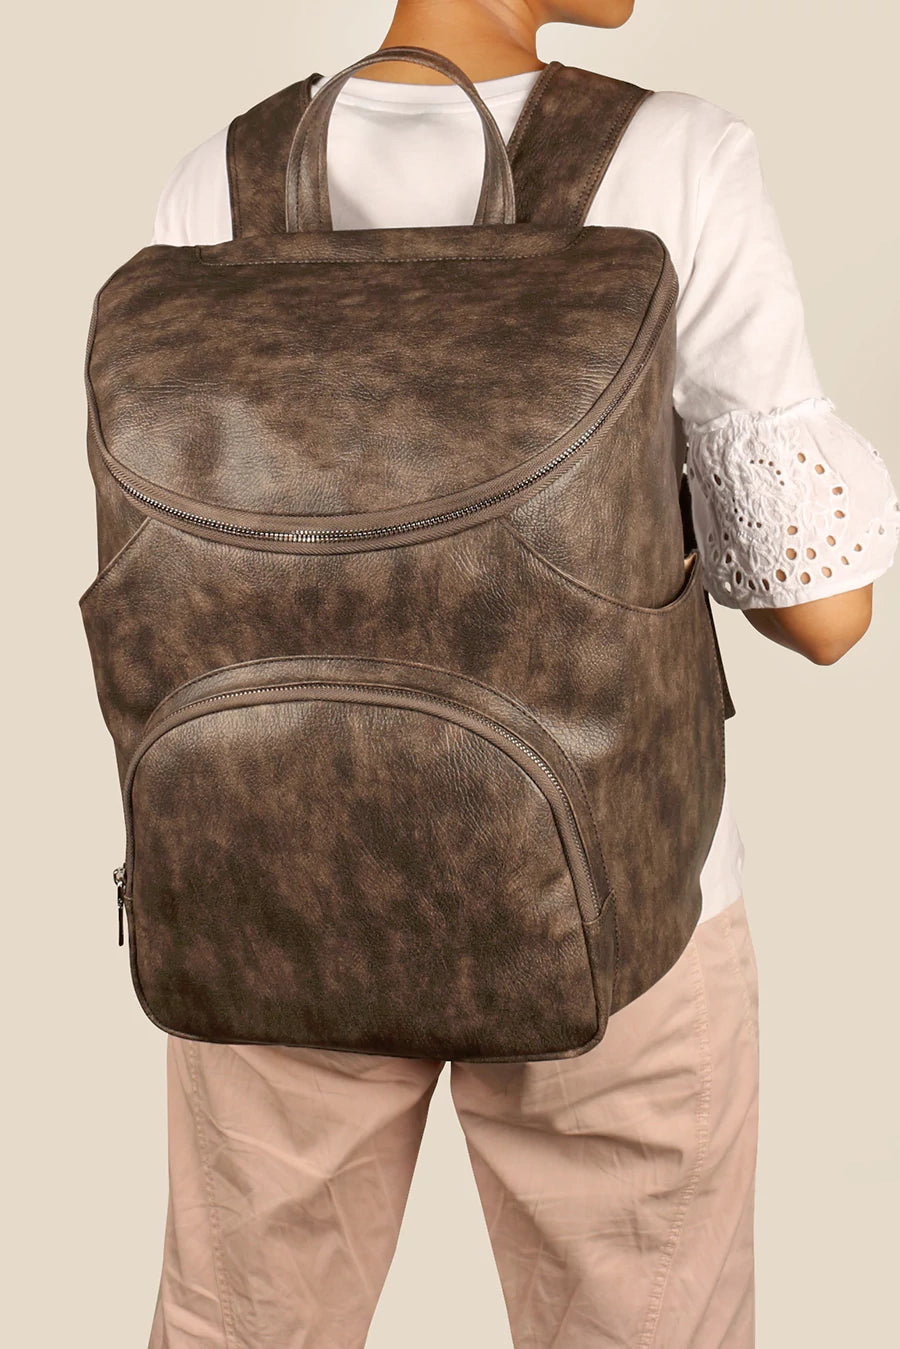 Willow Vegan Leather Multipurpose Backpack Model 2